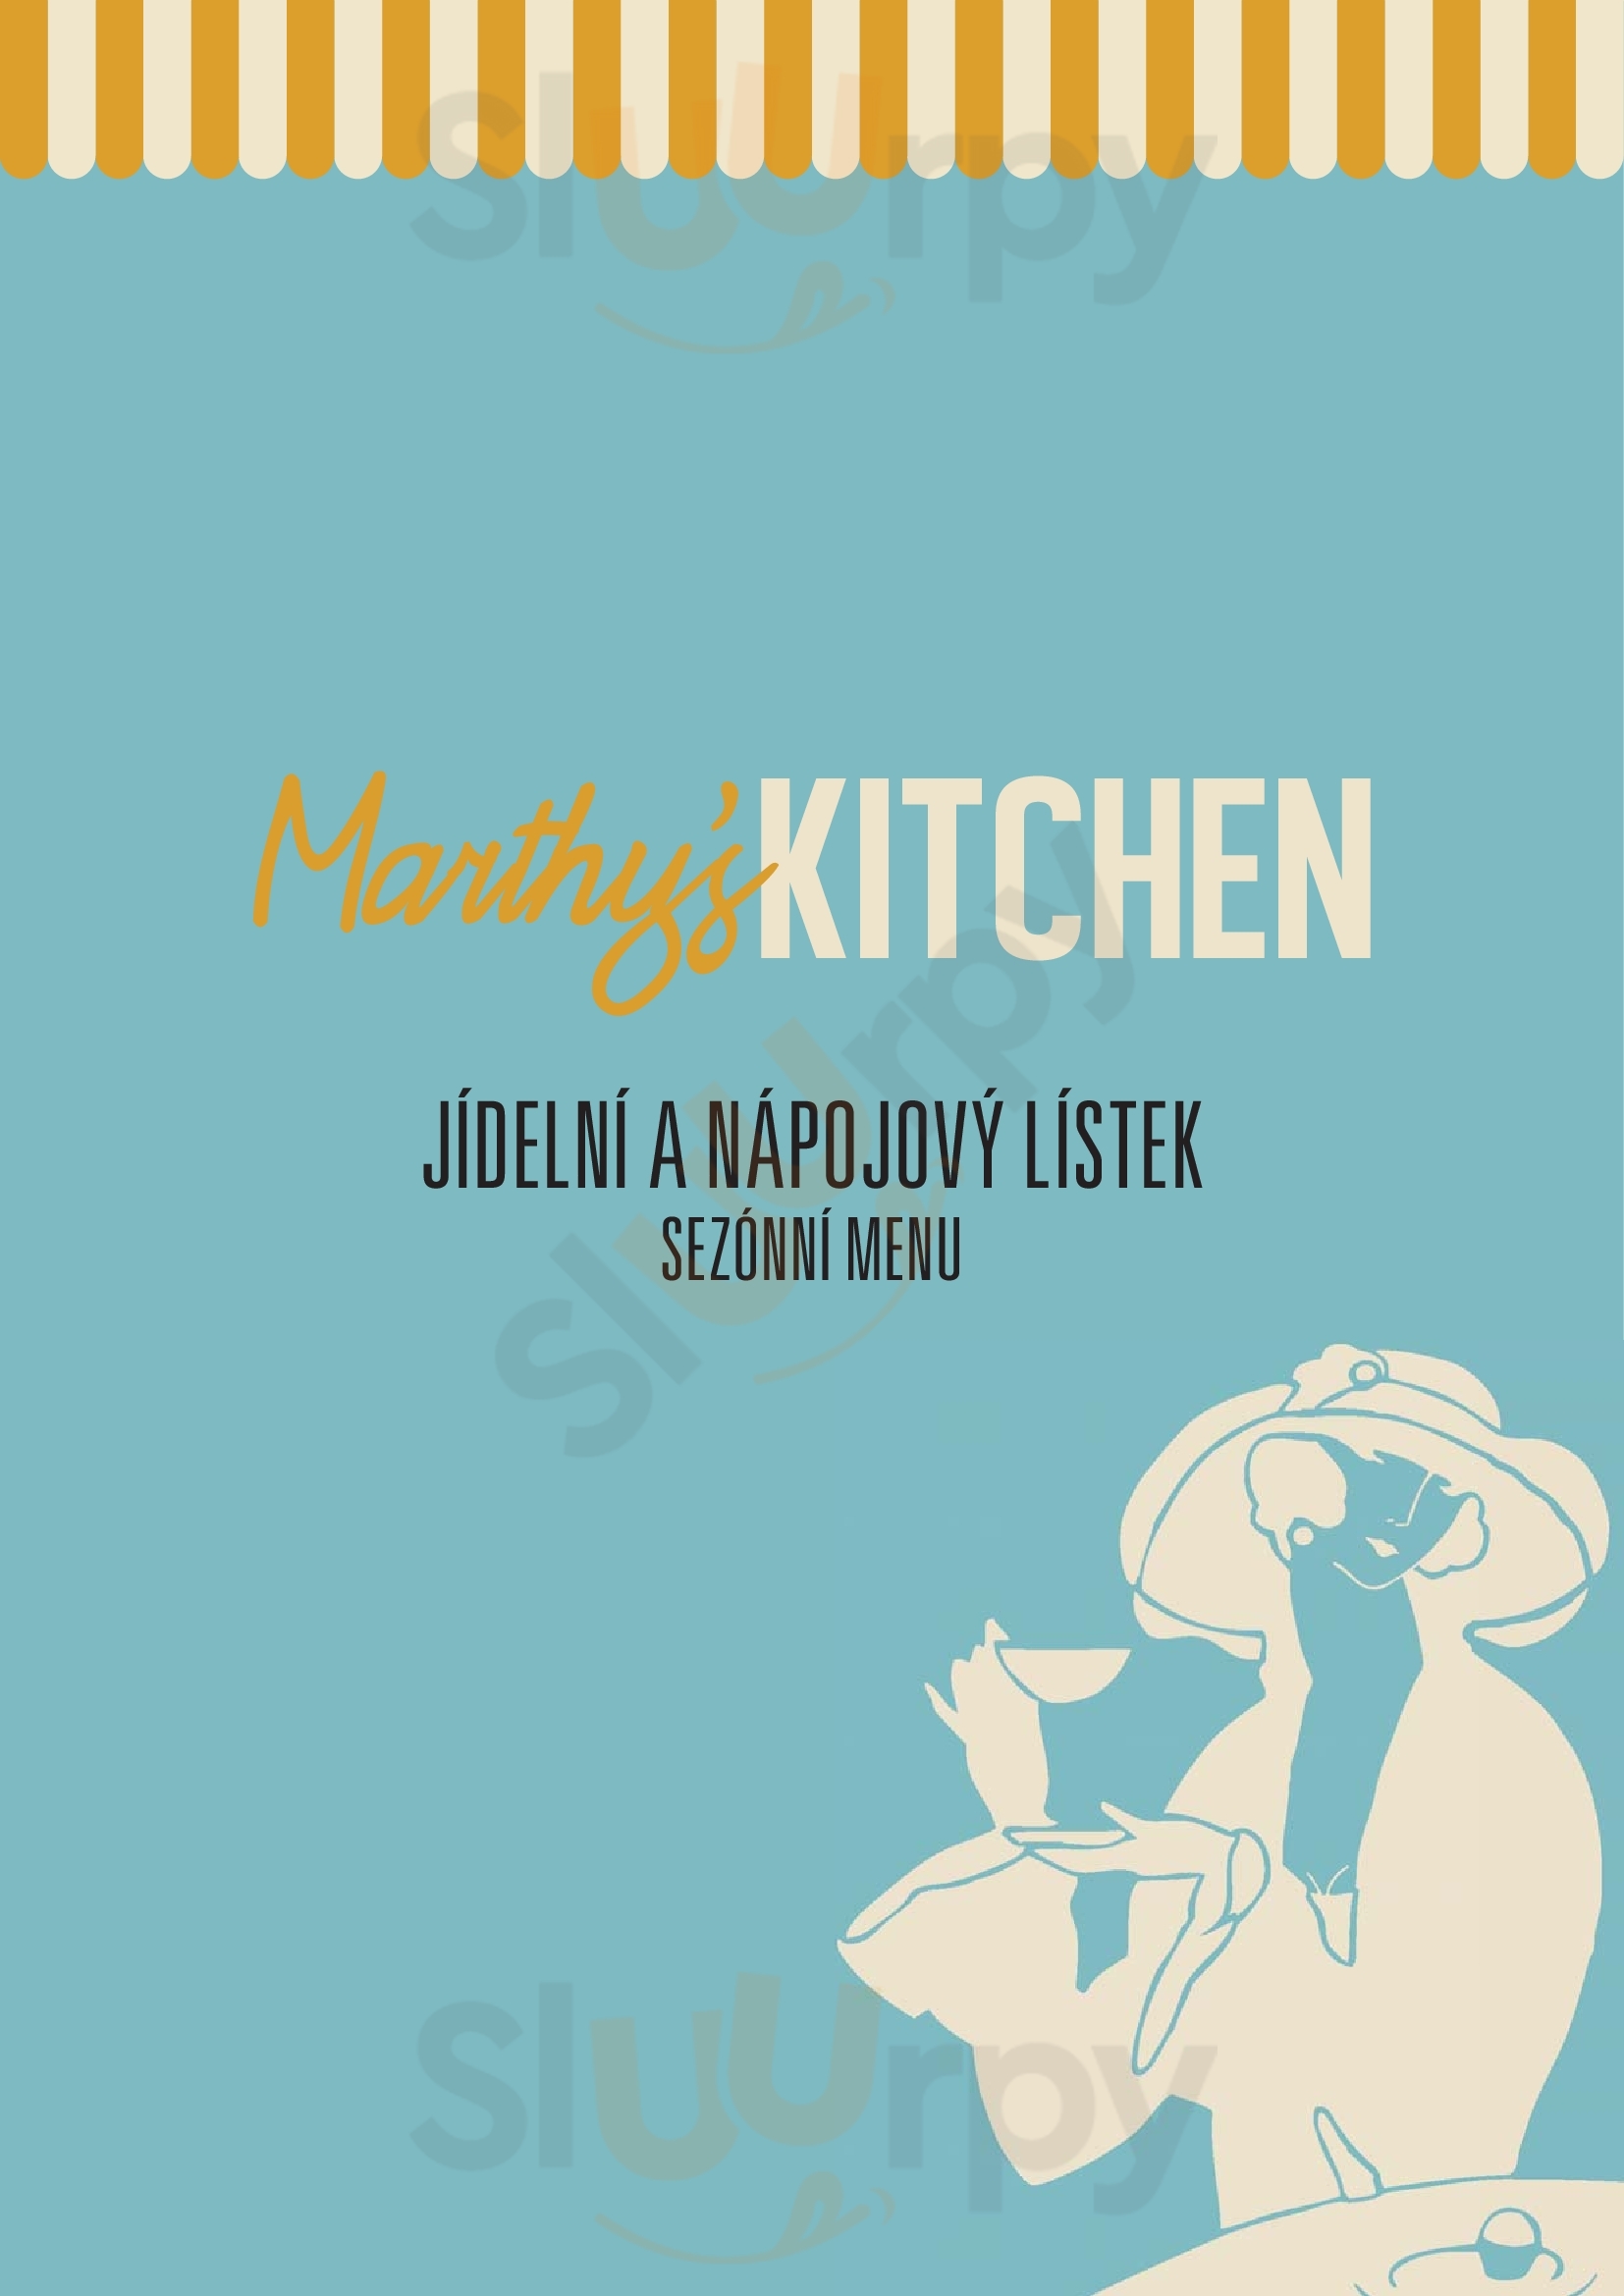 Marthy's Kitchen Praha Menu - 1